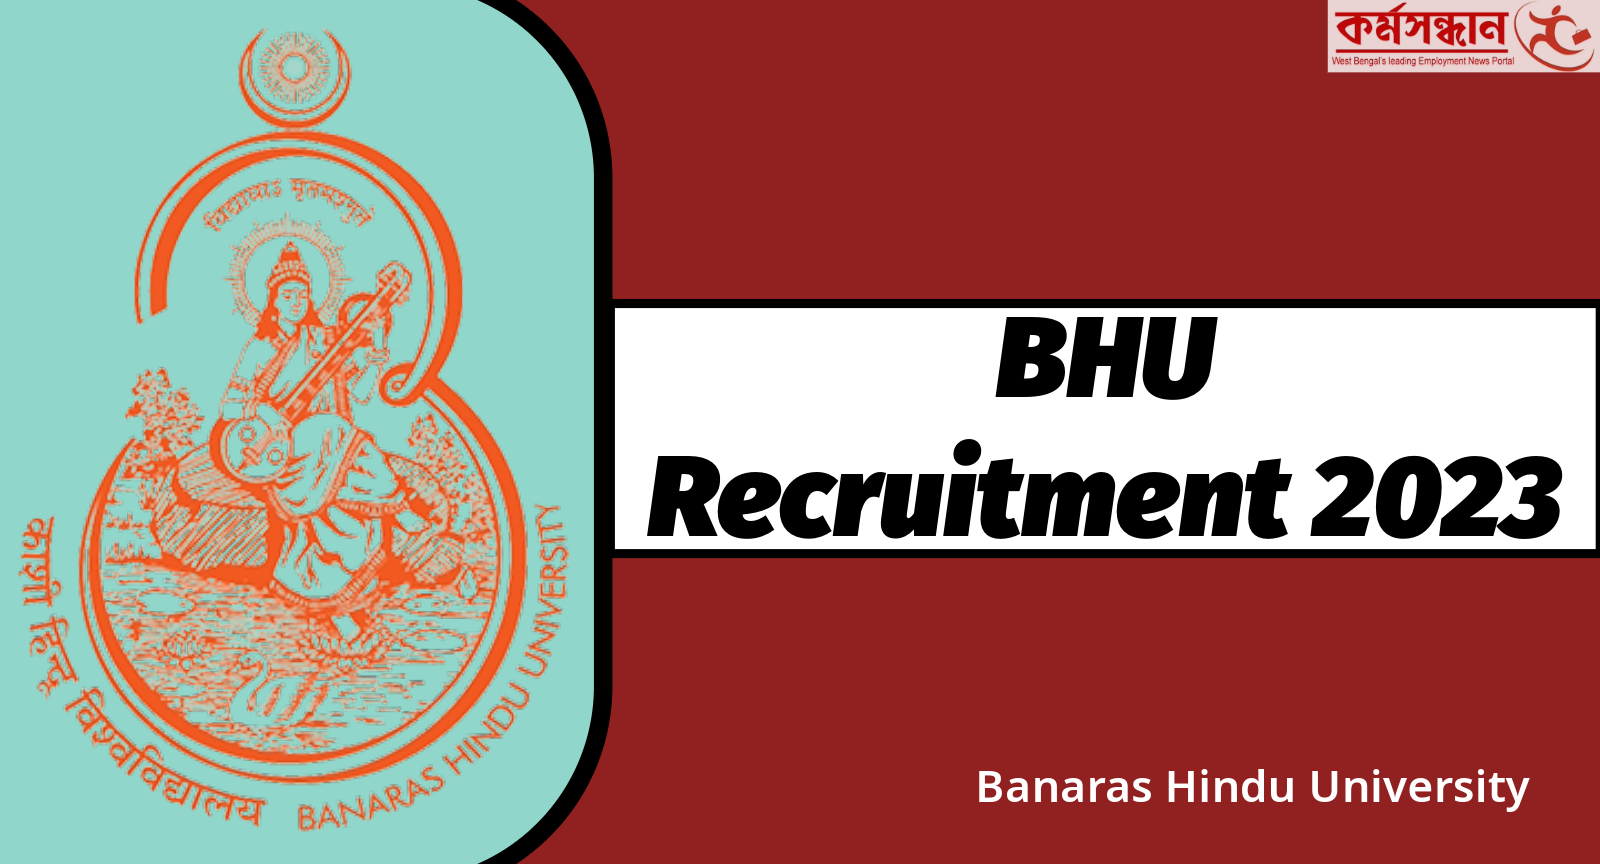 IIT BHU Junior Technician Recruitment 2023 Notification Out [27 Posts]  Apply Online - Sarkari Results Wala